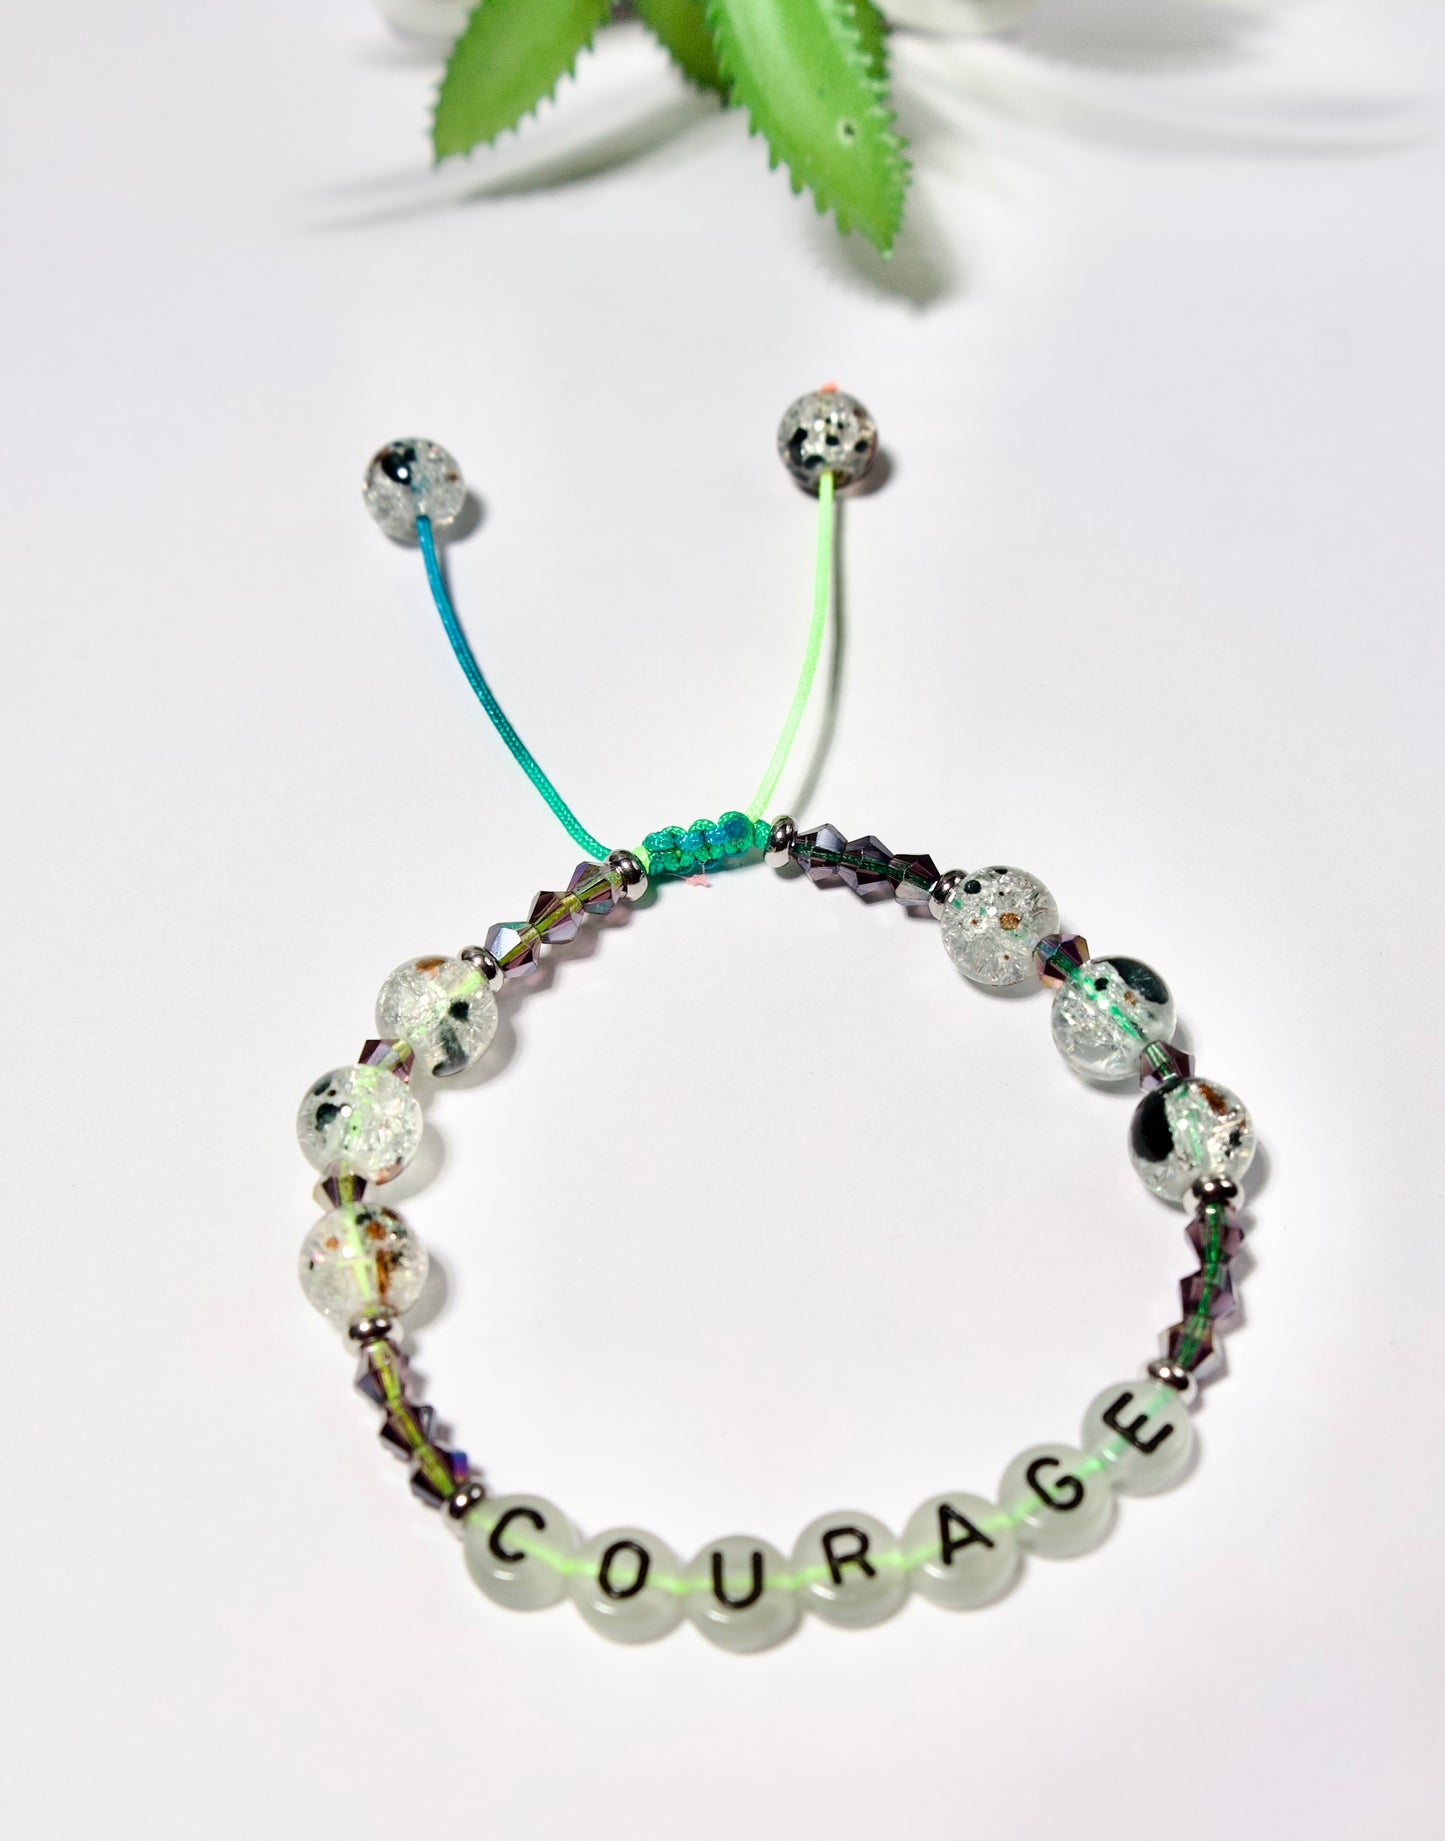 Courage Macrame Bracelet